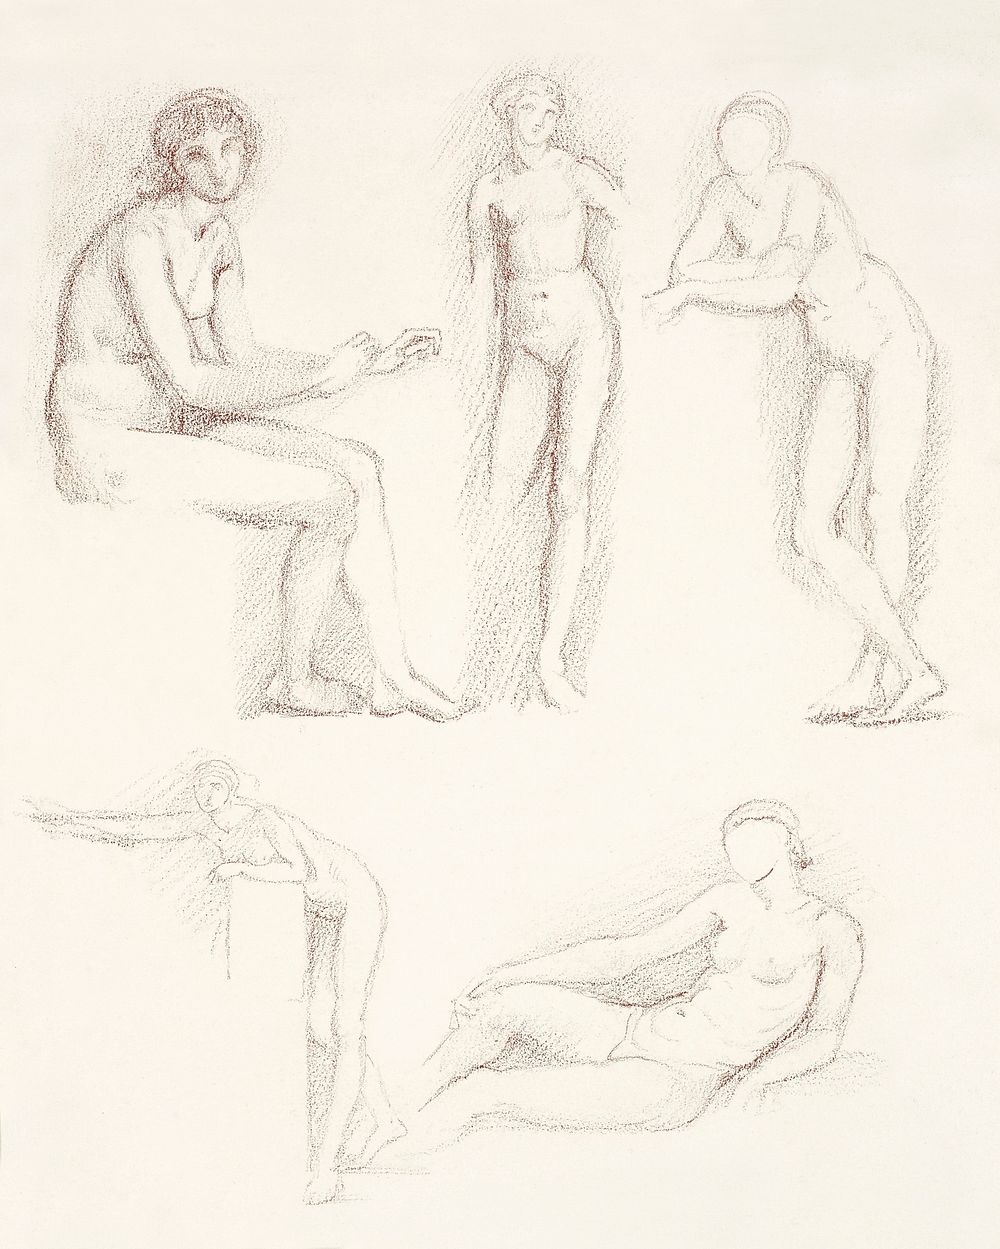 Female Nude: Five Studies by Edward Burne-Jones. Original from The Birmingham Museum. Digitally enhanced by rawpixel.